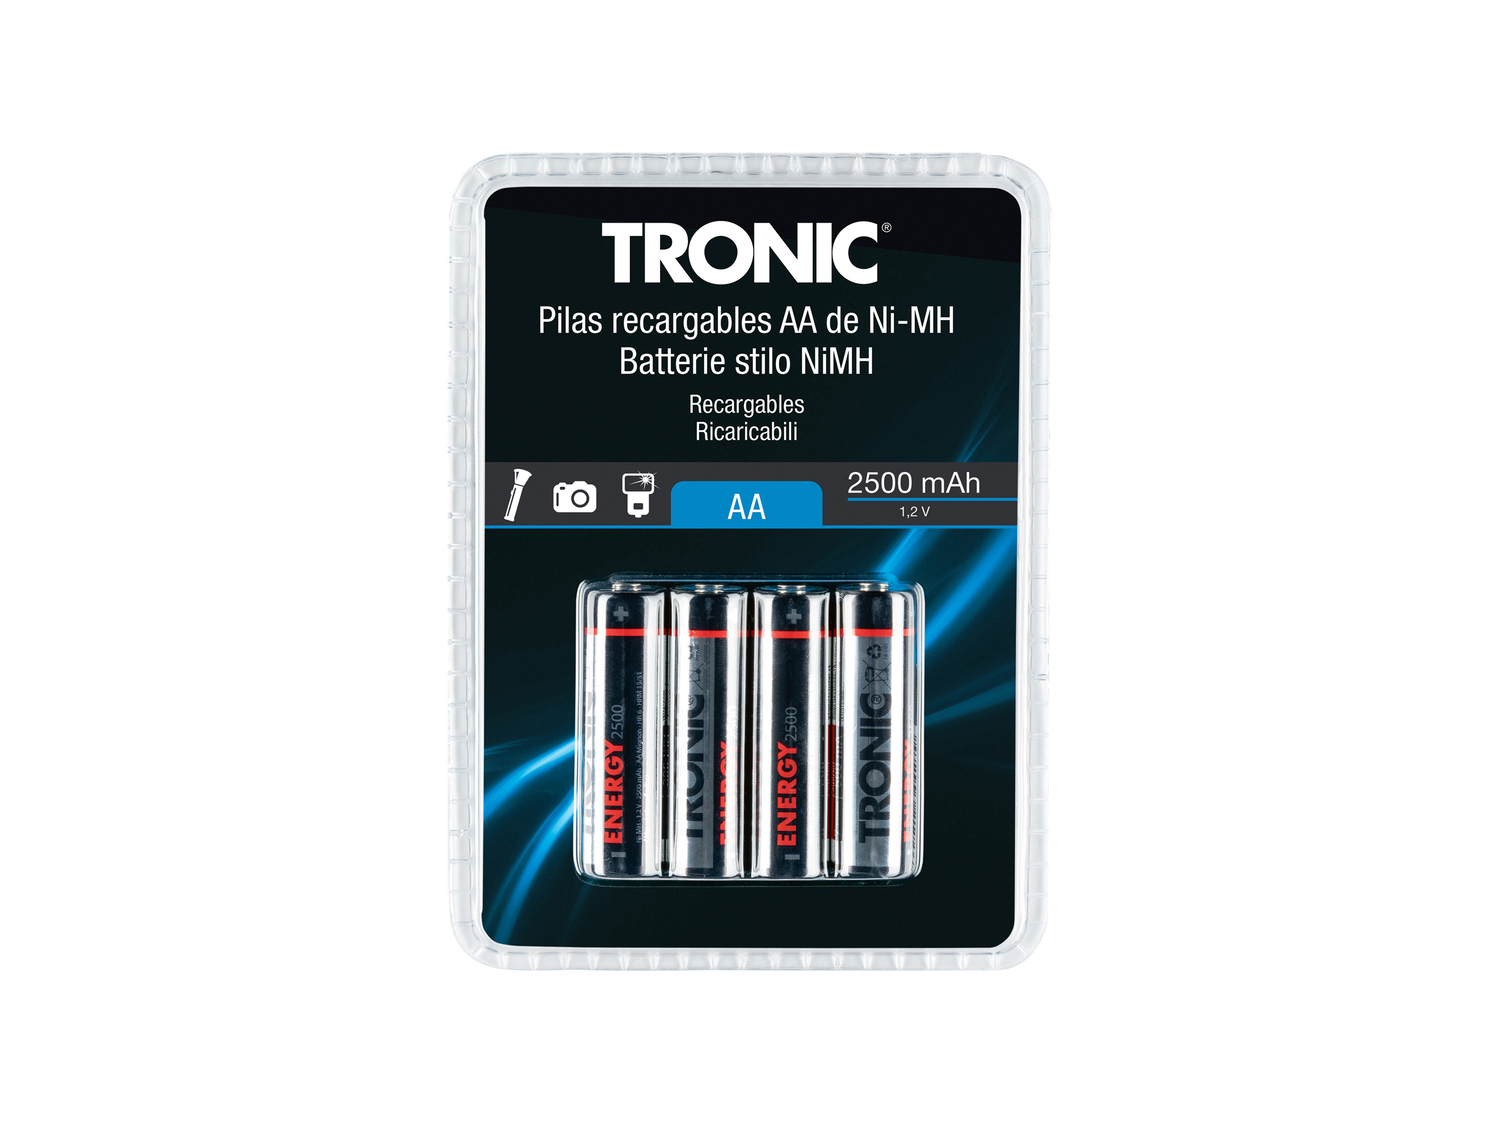 Batterie ricaricabili Tronic, prezzo 3.99 € 
- AAA Ministilo: 1000 mAh, 1,2 V
- ...